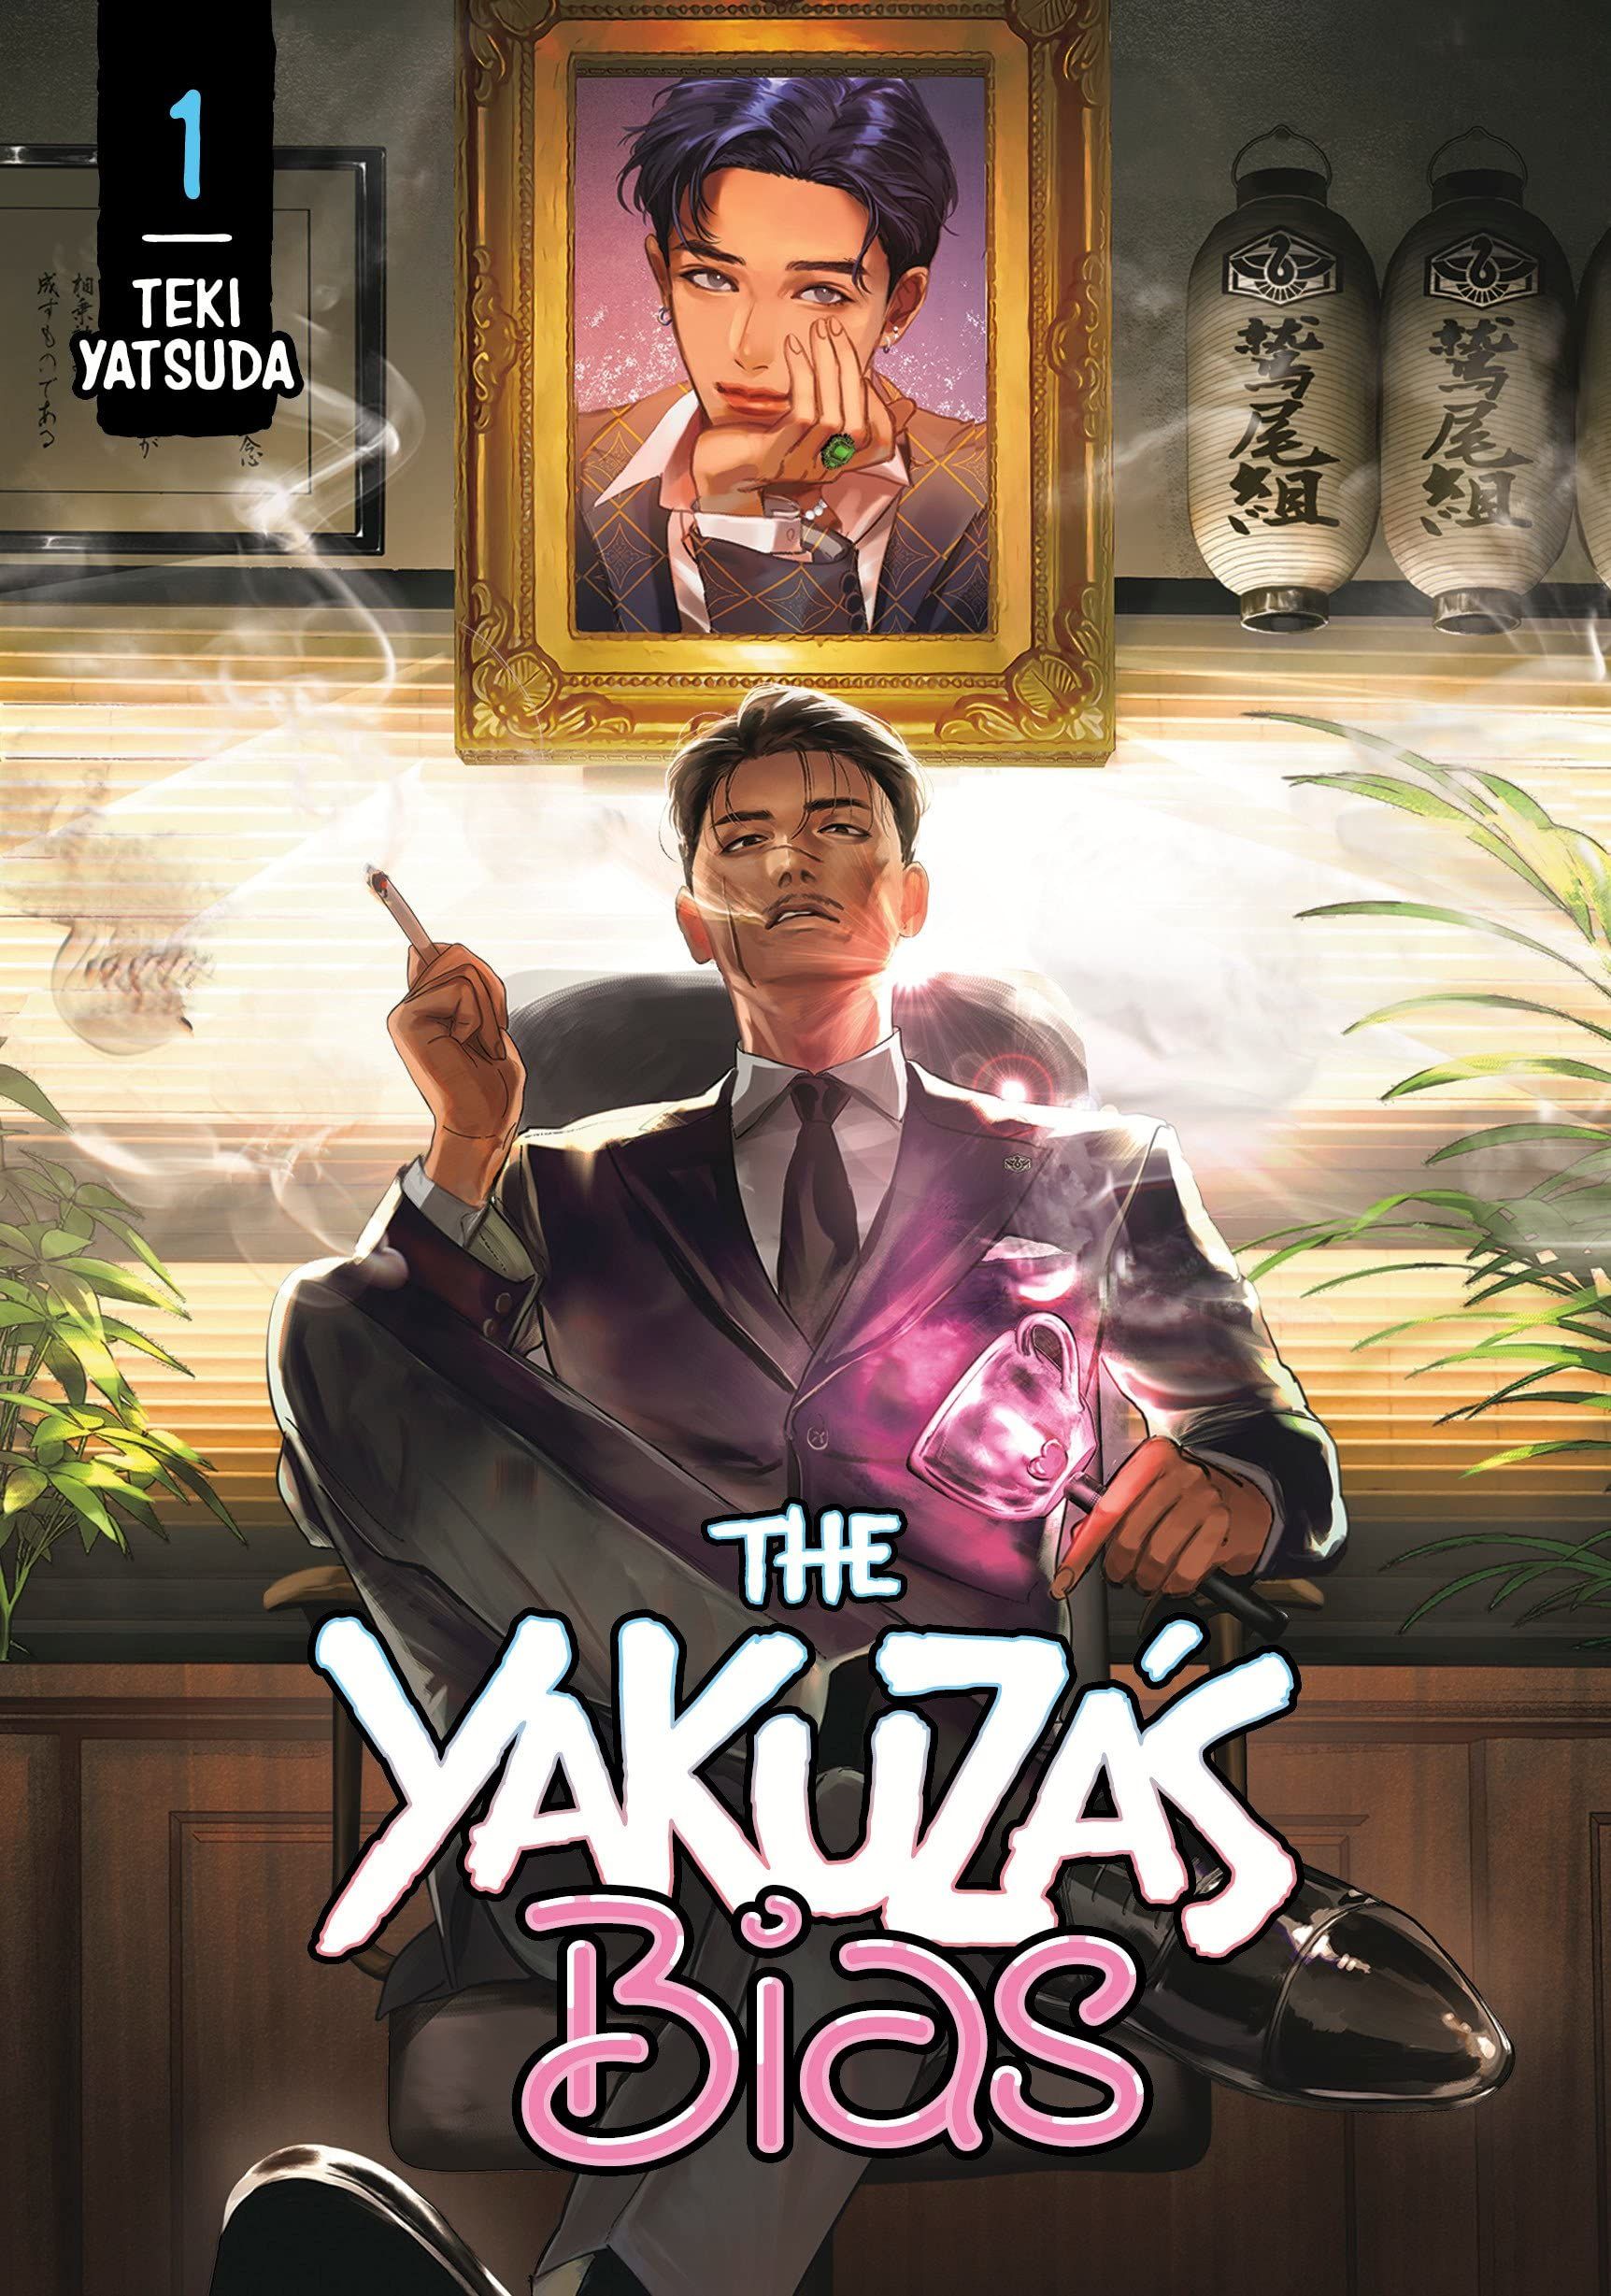 The Yakuza's Bias by Teki Yatsuda cover